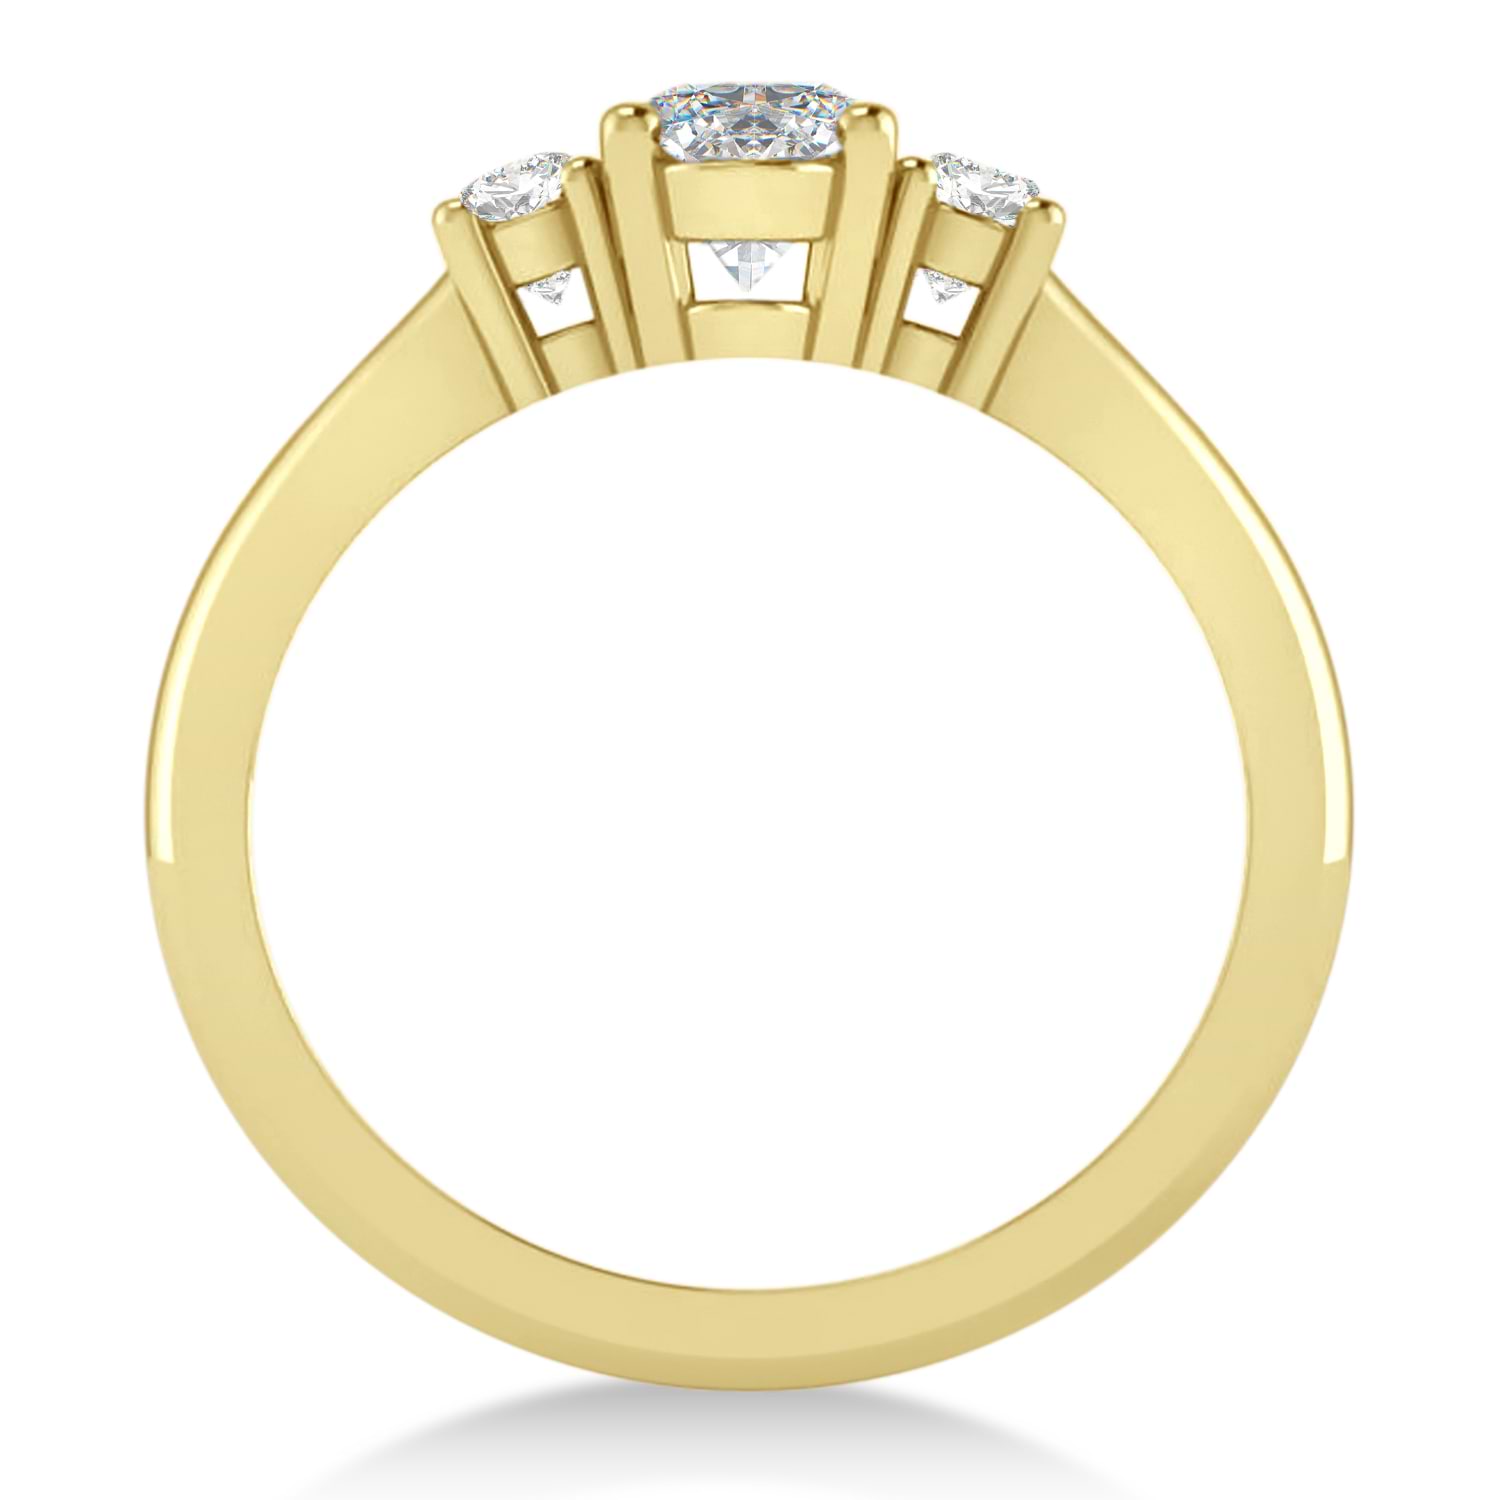 Oval Moissanite & Diamond Three-Stone Engagement Ring 14k Yellow Gold (1.20ct)